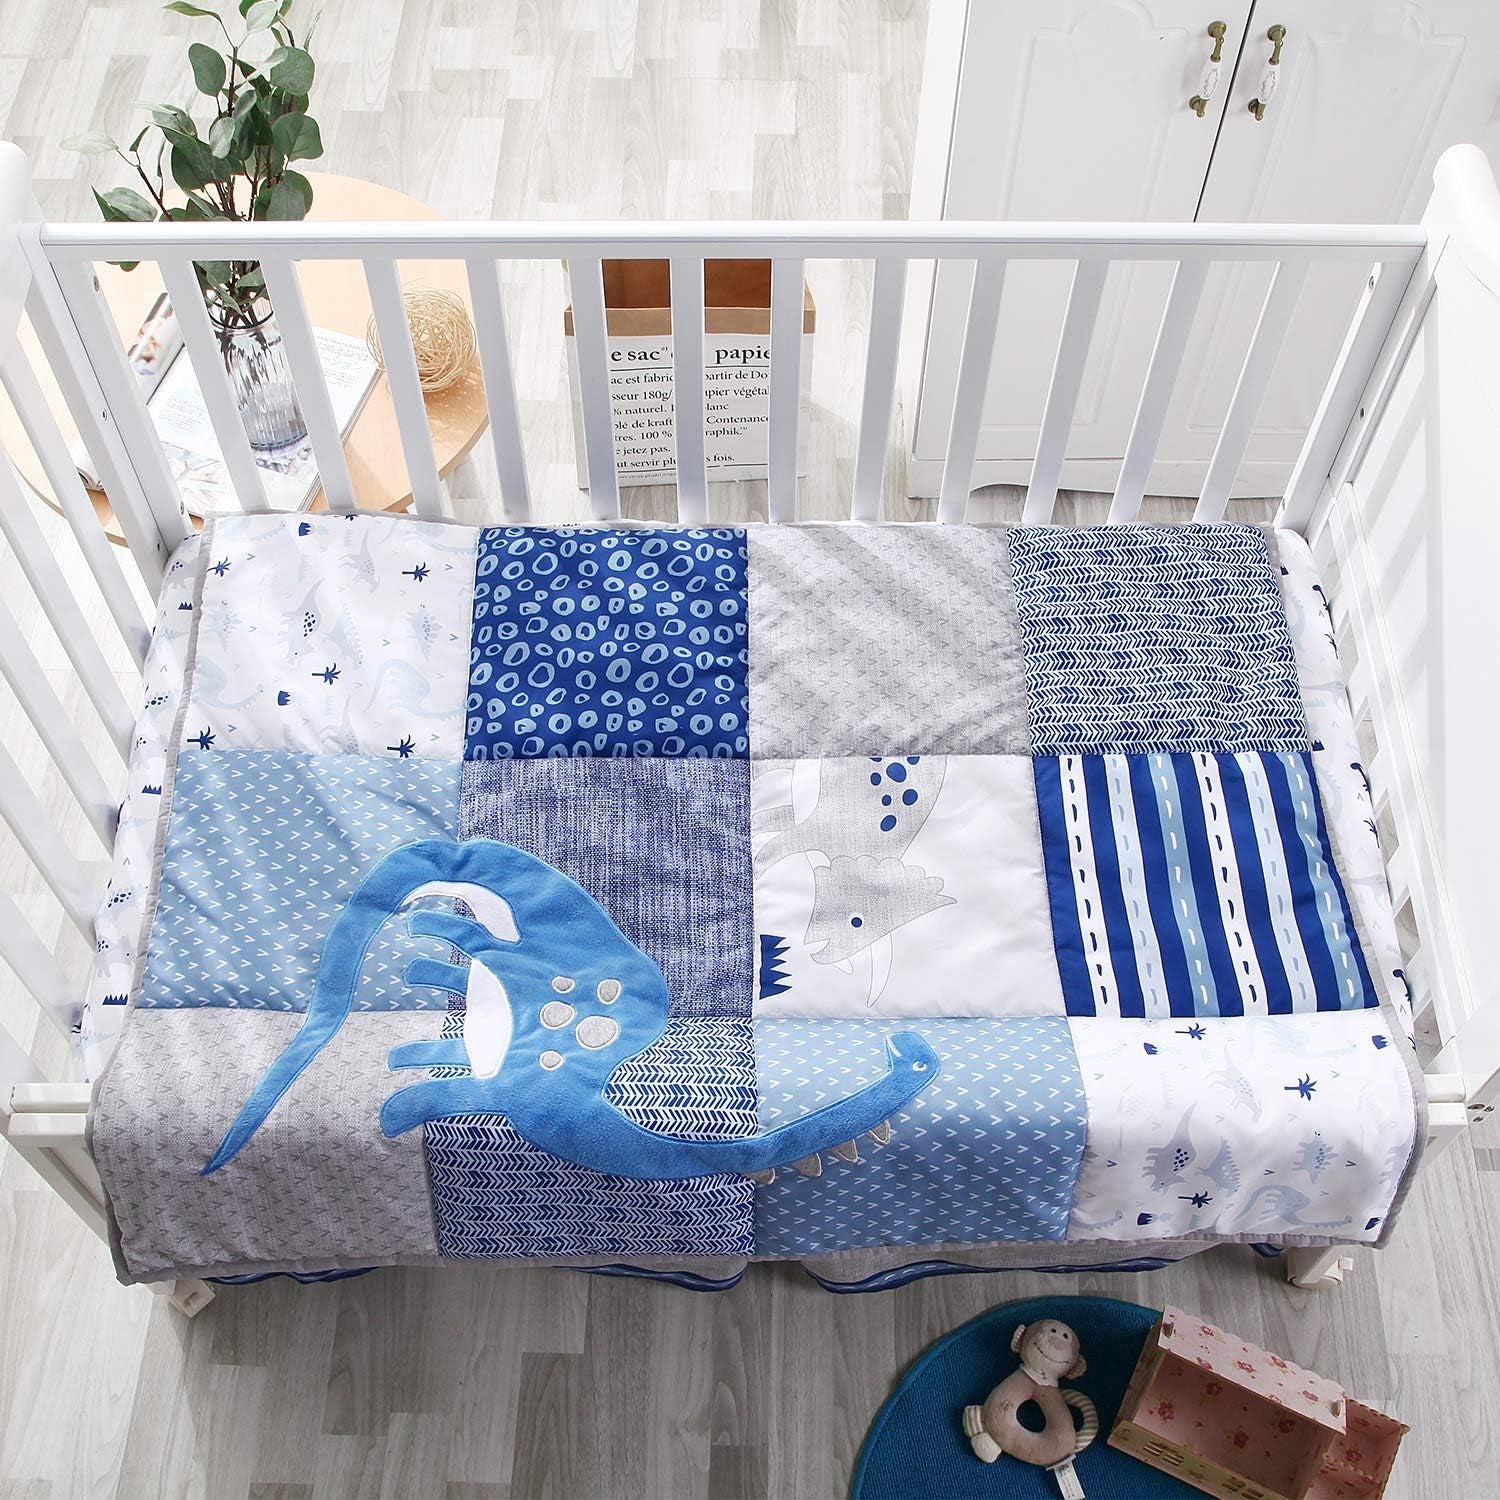 3 Piece Baby Crib Bedding Set, Dinosaur Standard Size Crib Set, Nursery Bedding for Boys, Crib Sheet, Comforter, Crib Skirt, 28" X 52", Blue/Grey